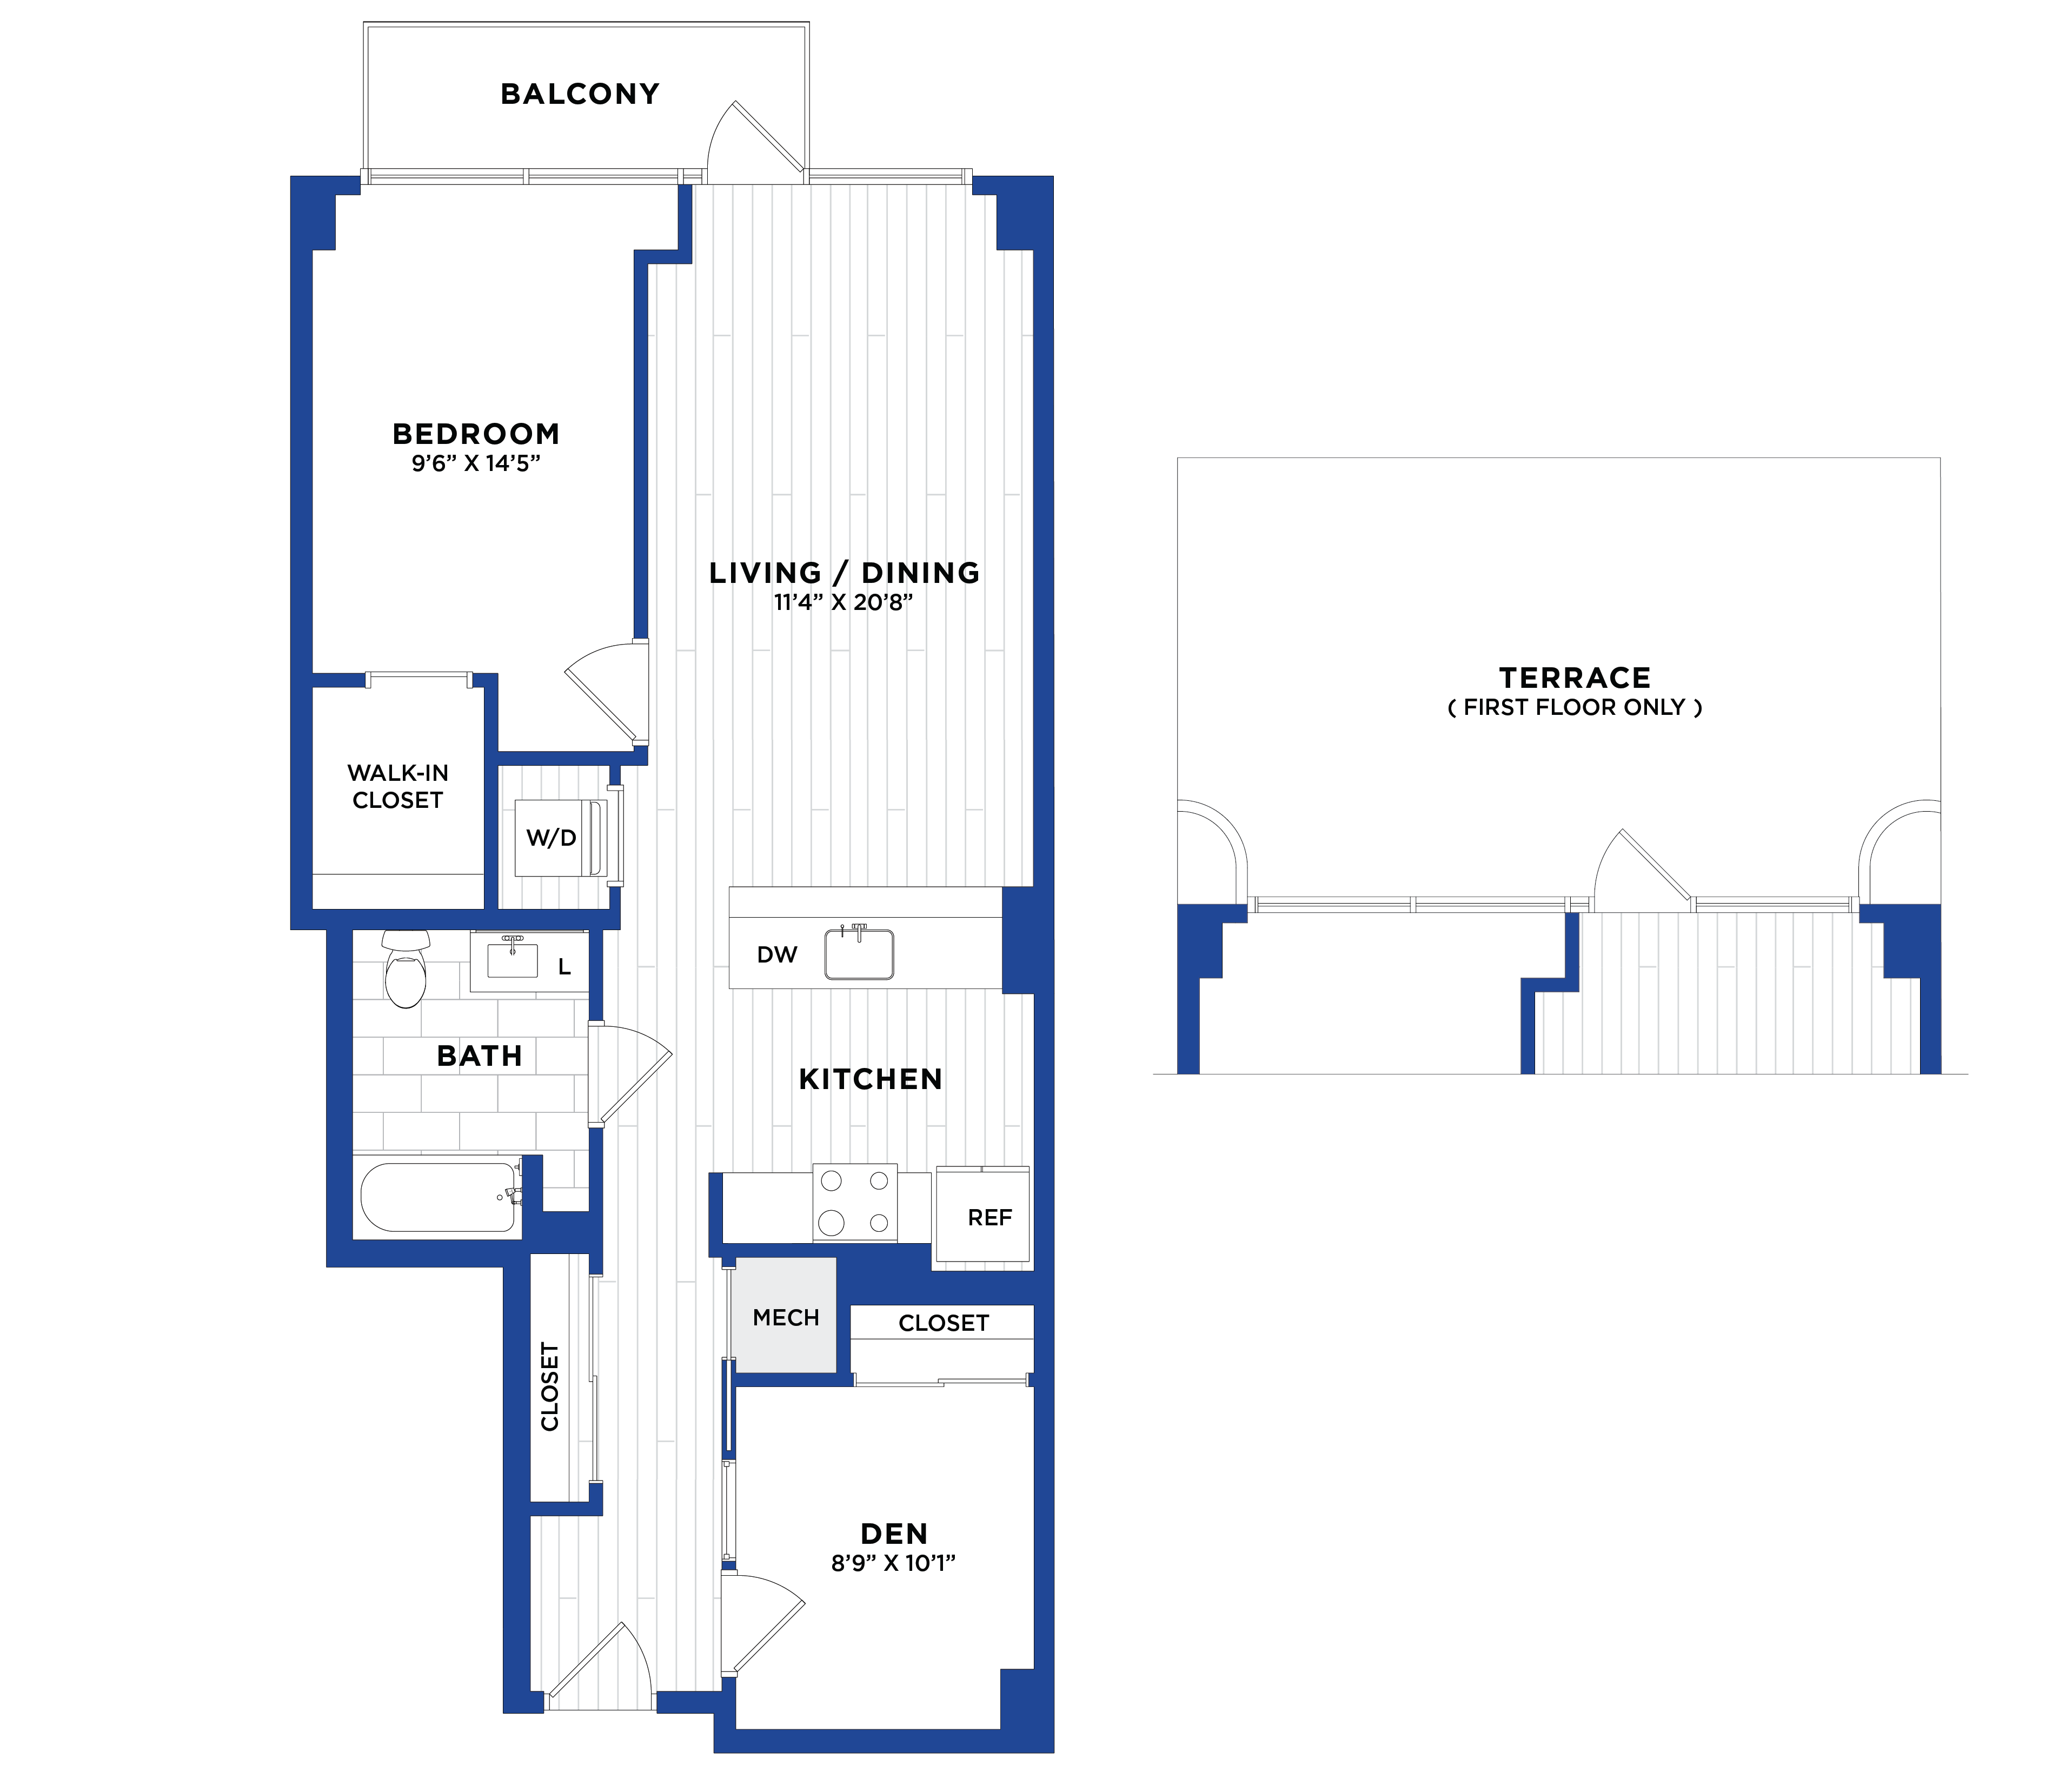 Apartment 0208 floorplan